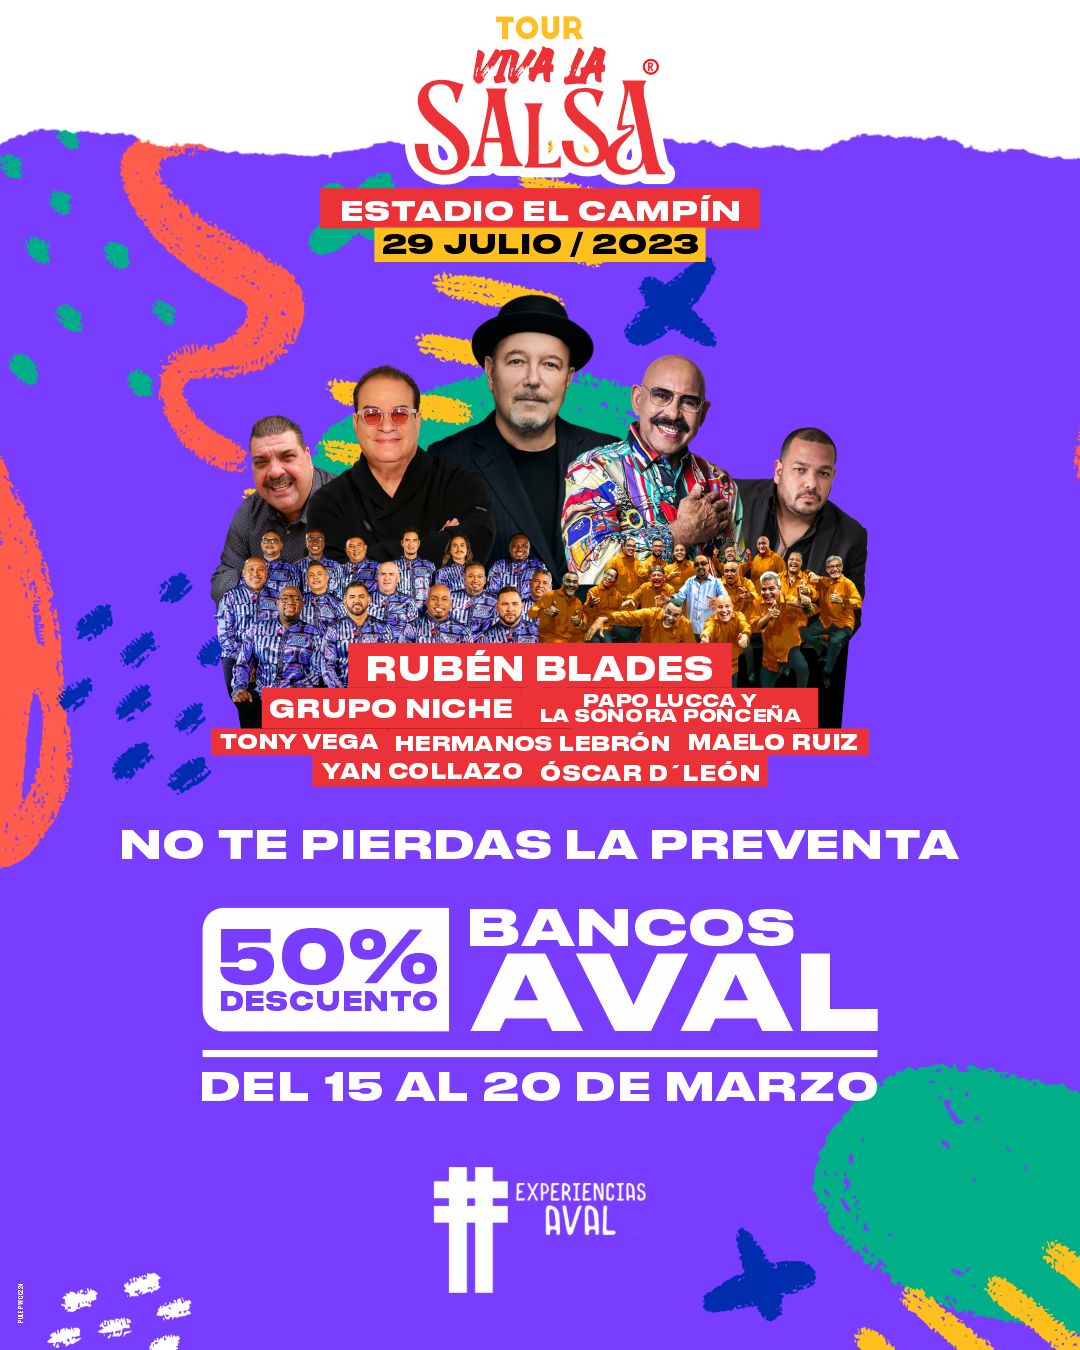 Tour Viva la Salsa en Bogotá y Medellín 2023